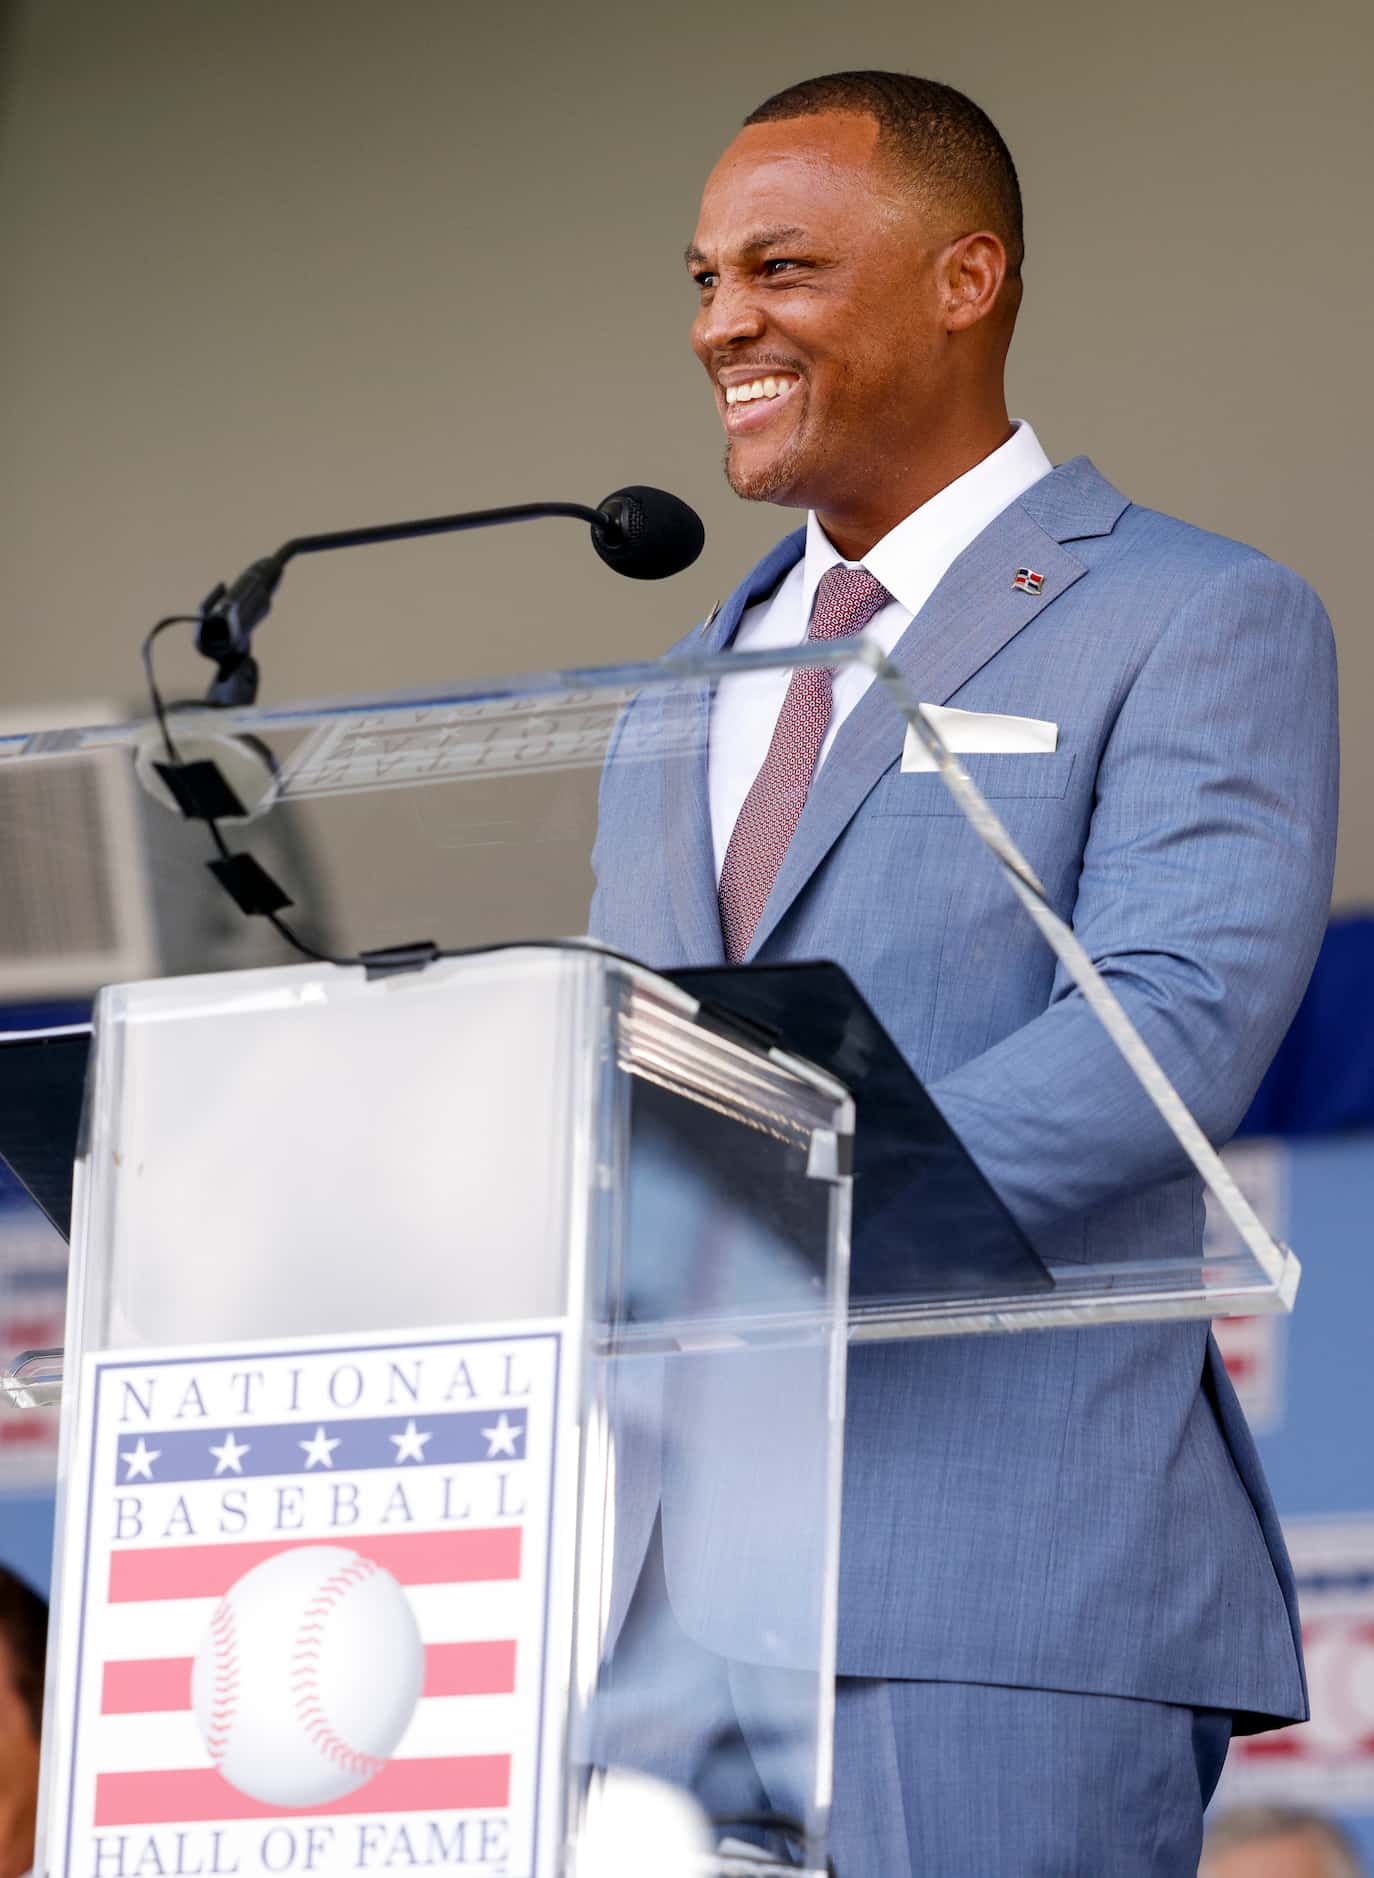 Former Texas Rangers third baseman Adrián Beltré smiles as he speaks during his National...